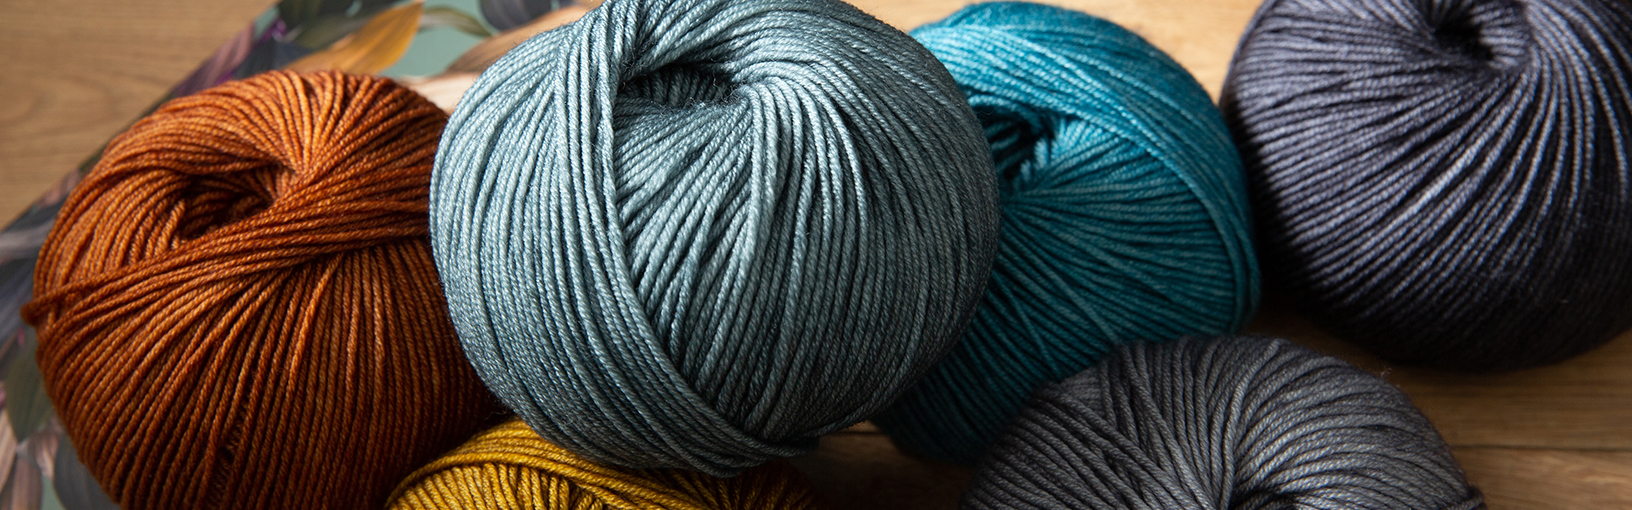 High quality yarns for knitting, crocheting & felting Lana Grossa Yarns | New releases